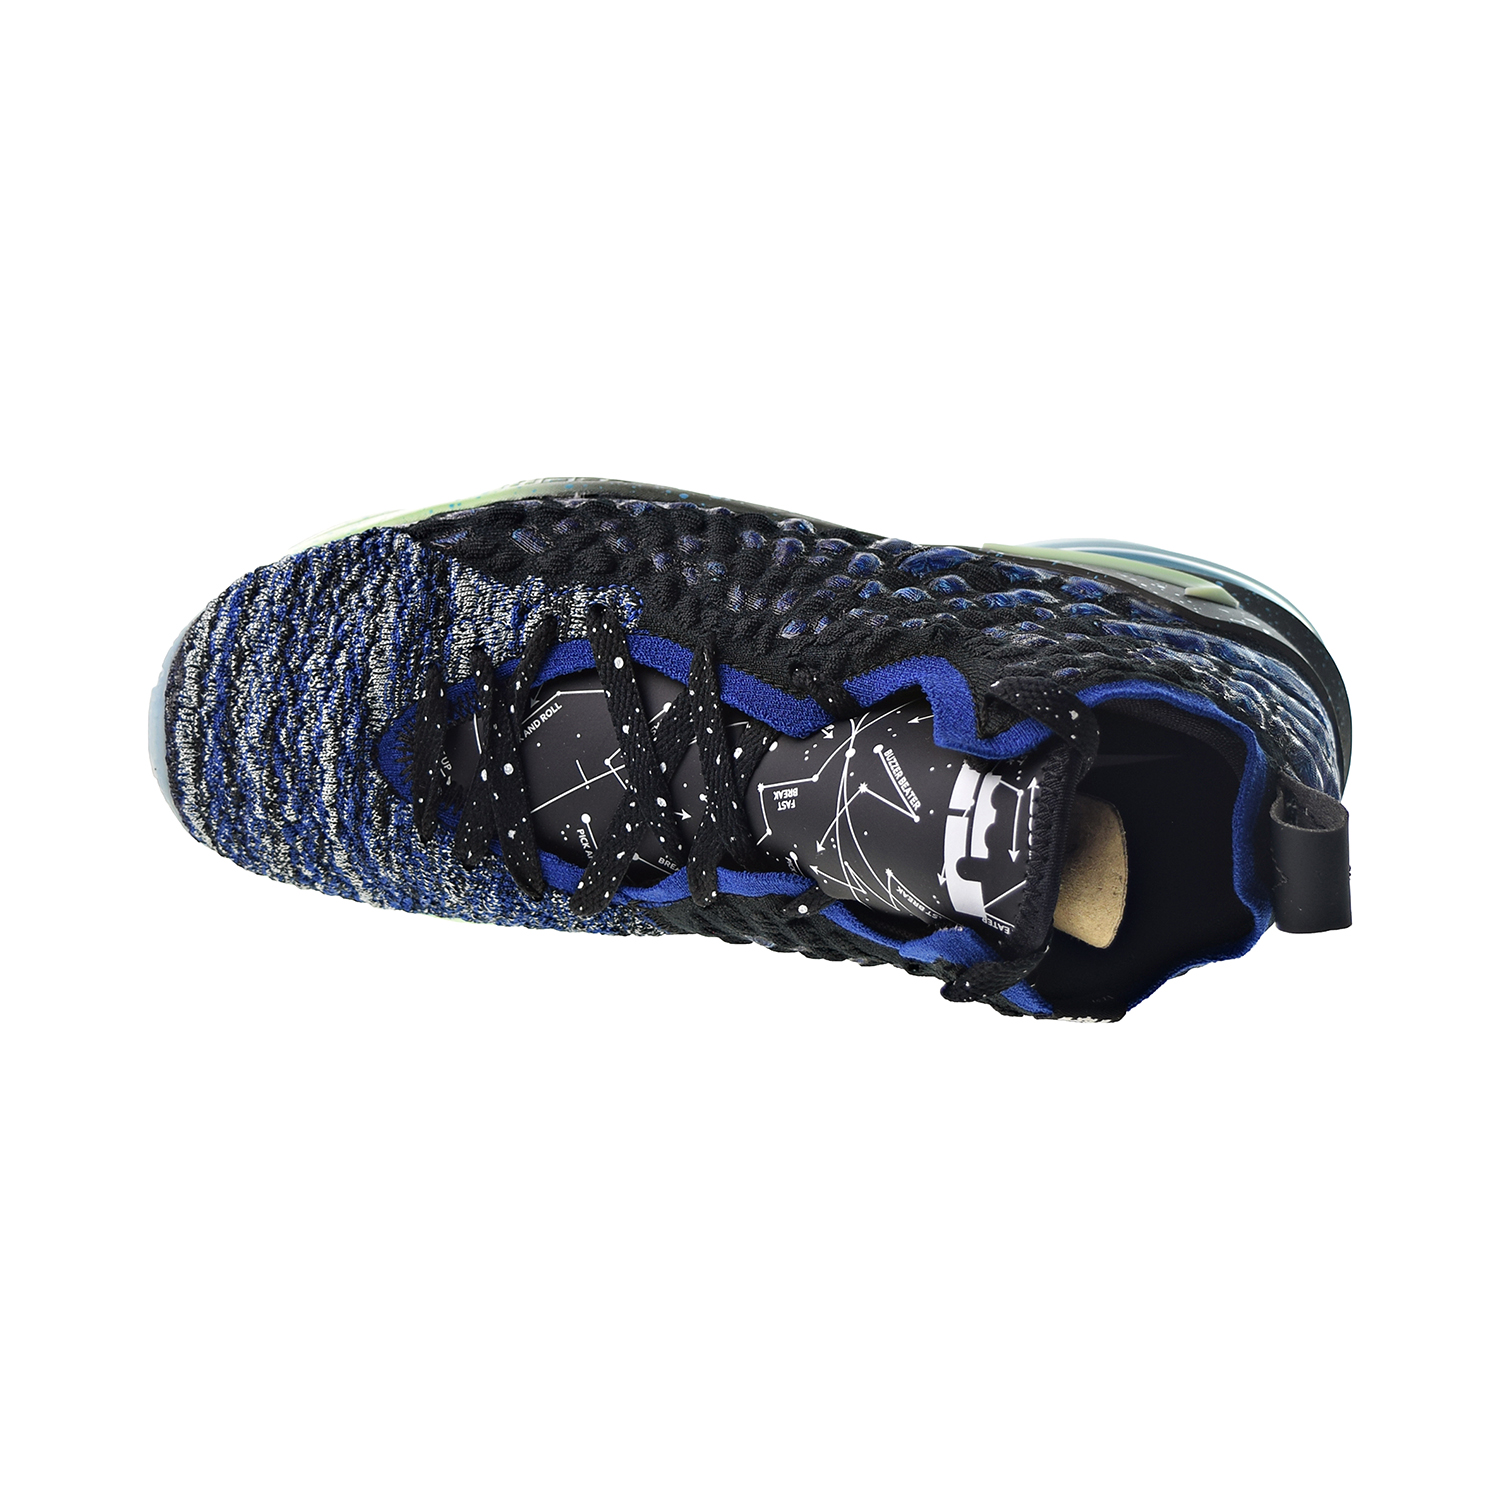 Nike LeBron XVII ‘Constellations’ Big Kids' Shoes Deep Royal Blue-Vapor Green bq5594-407 - image 5 of 6